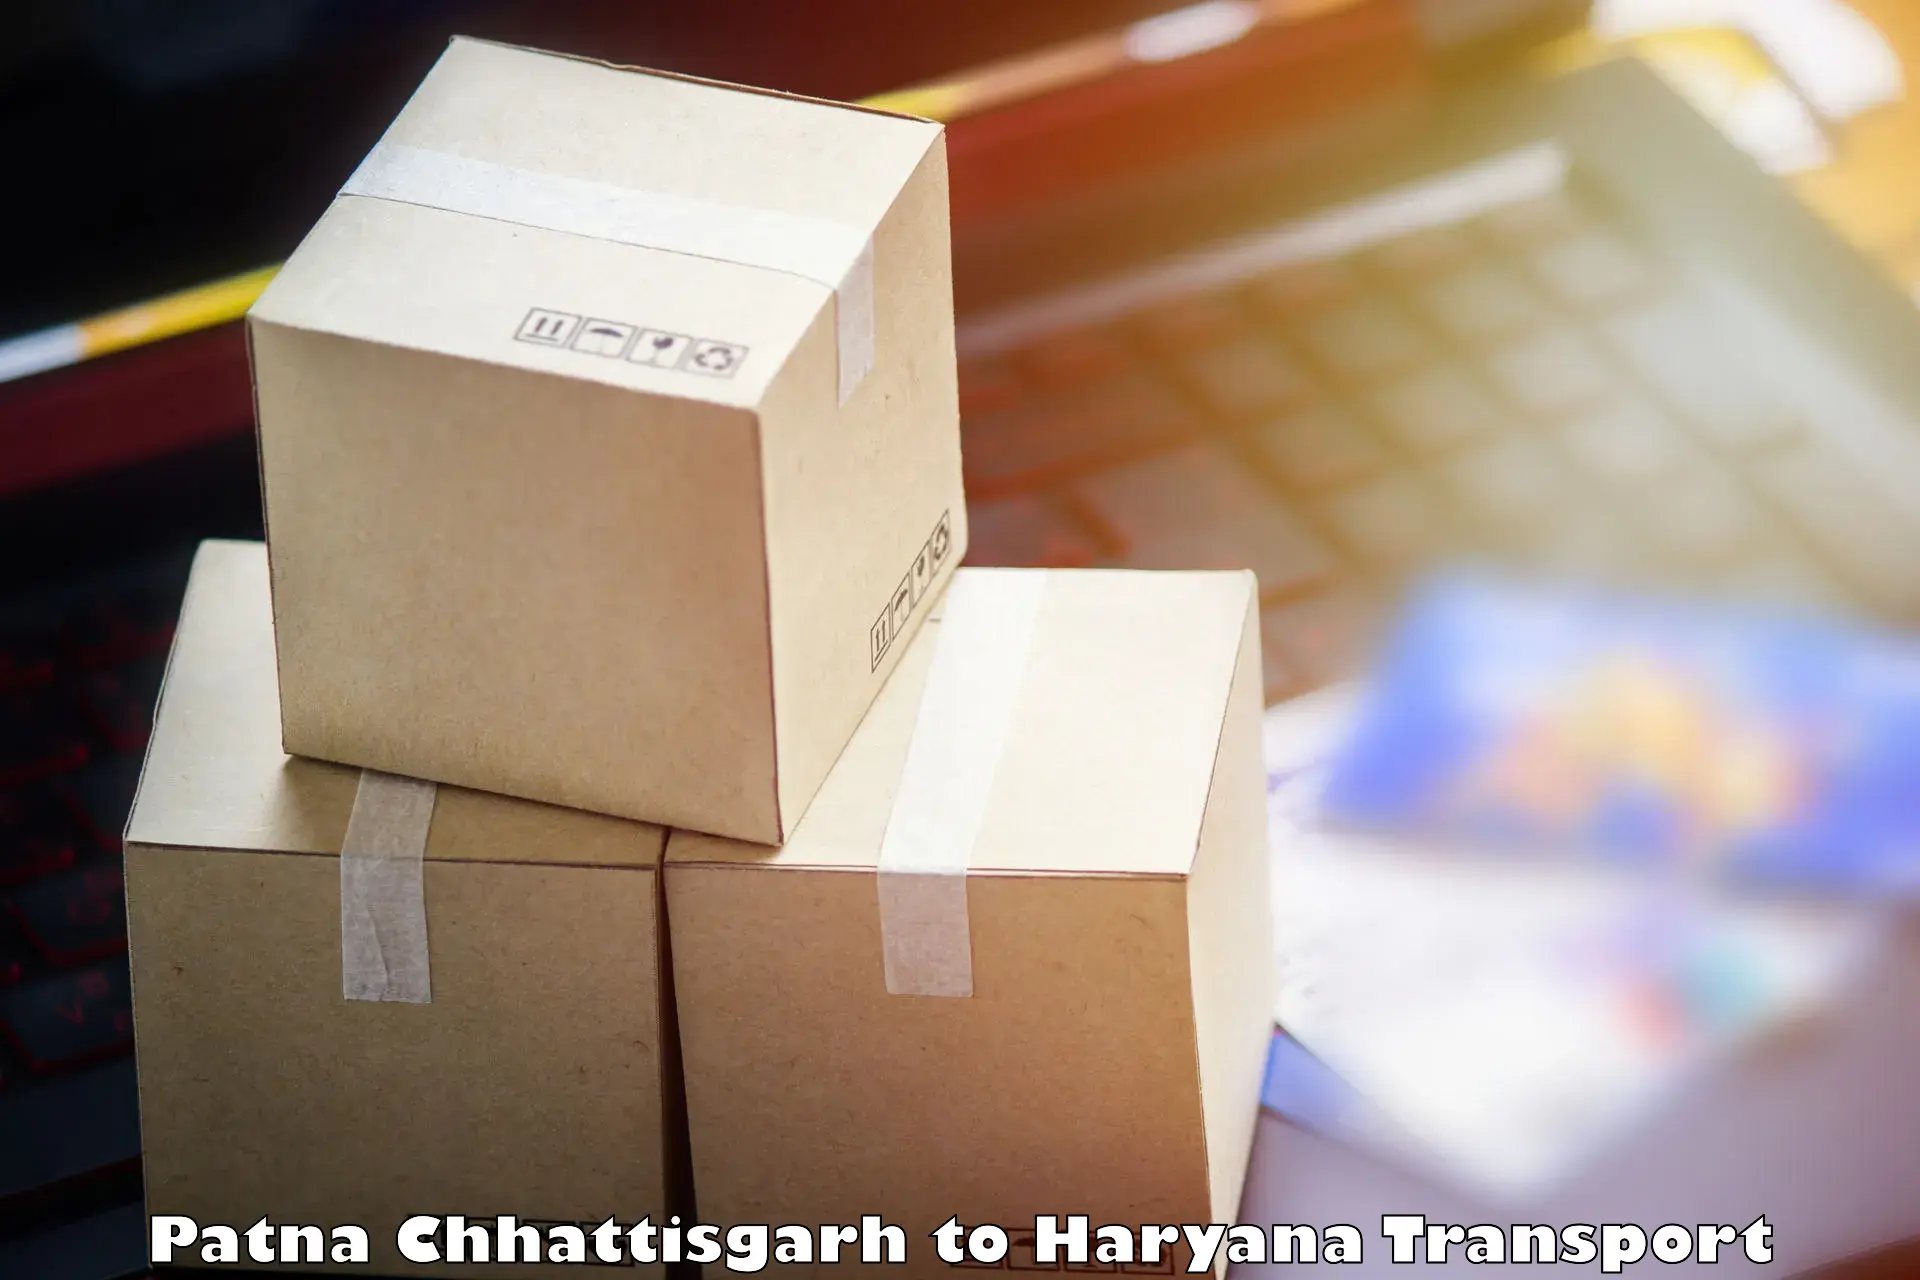 Cargo transport services Patna Chhattisgarh to Gurgaon